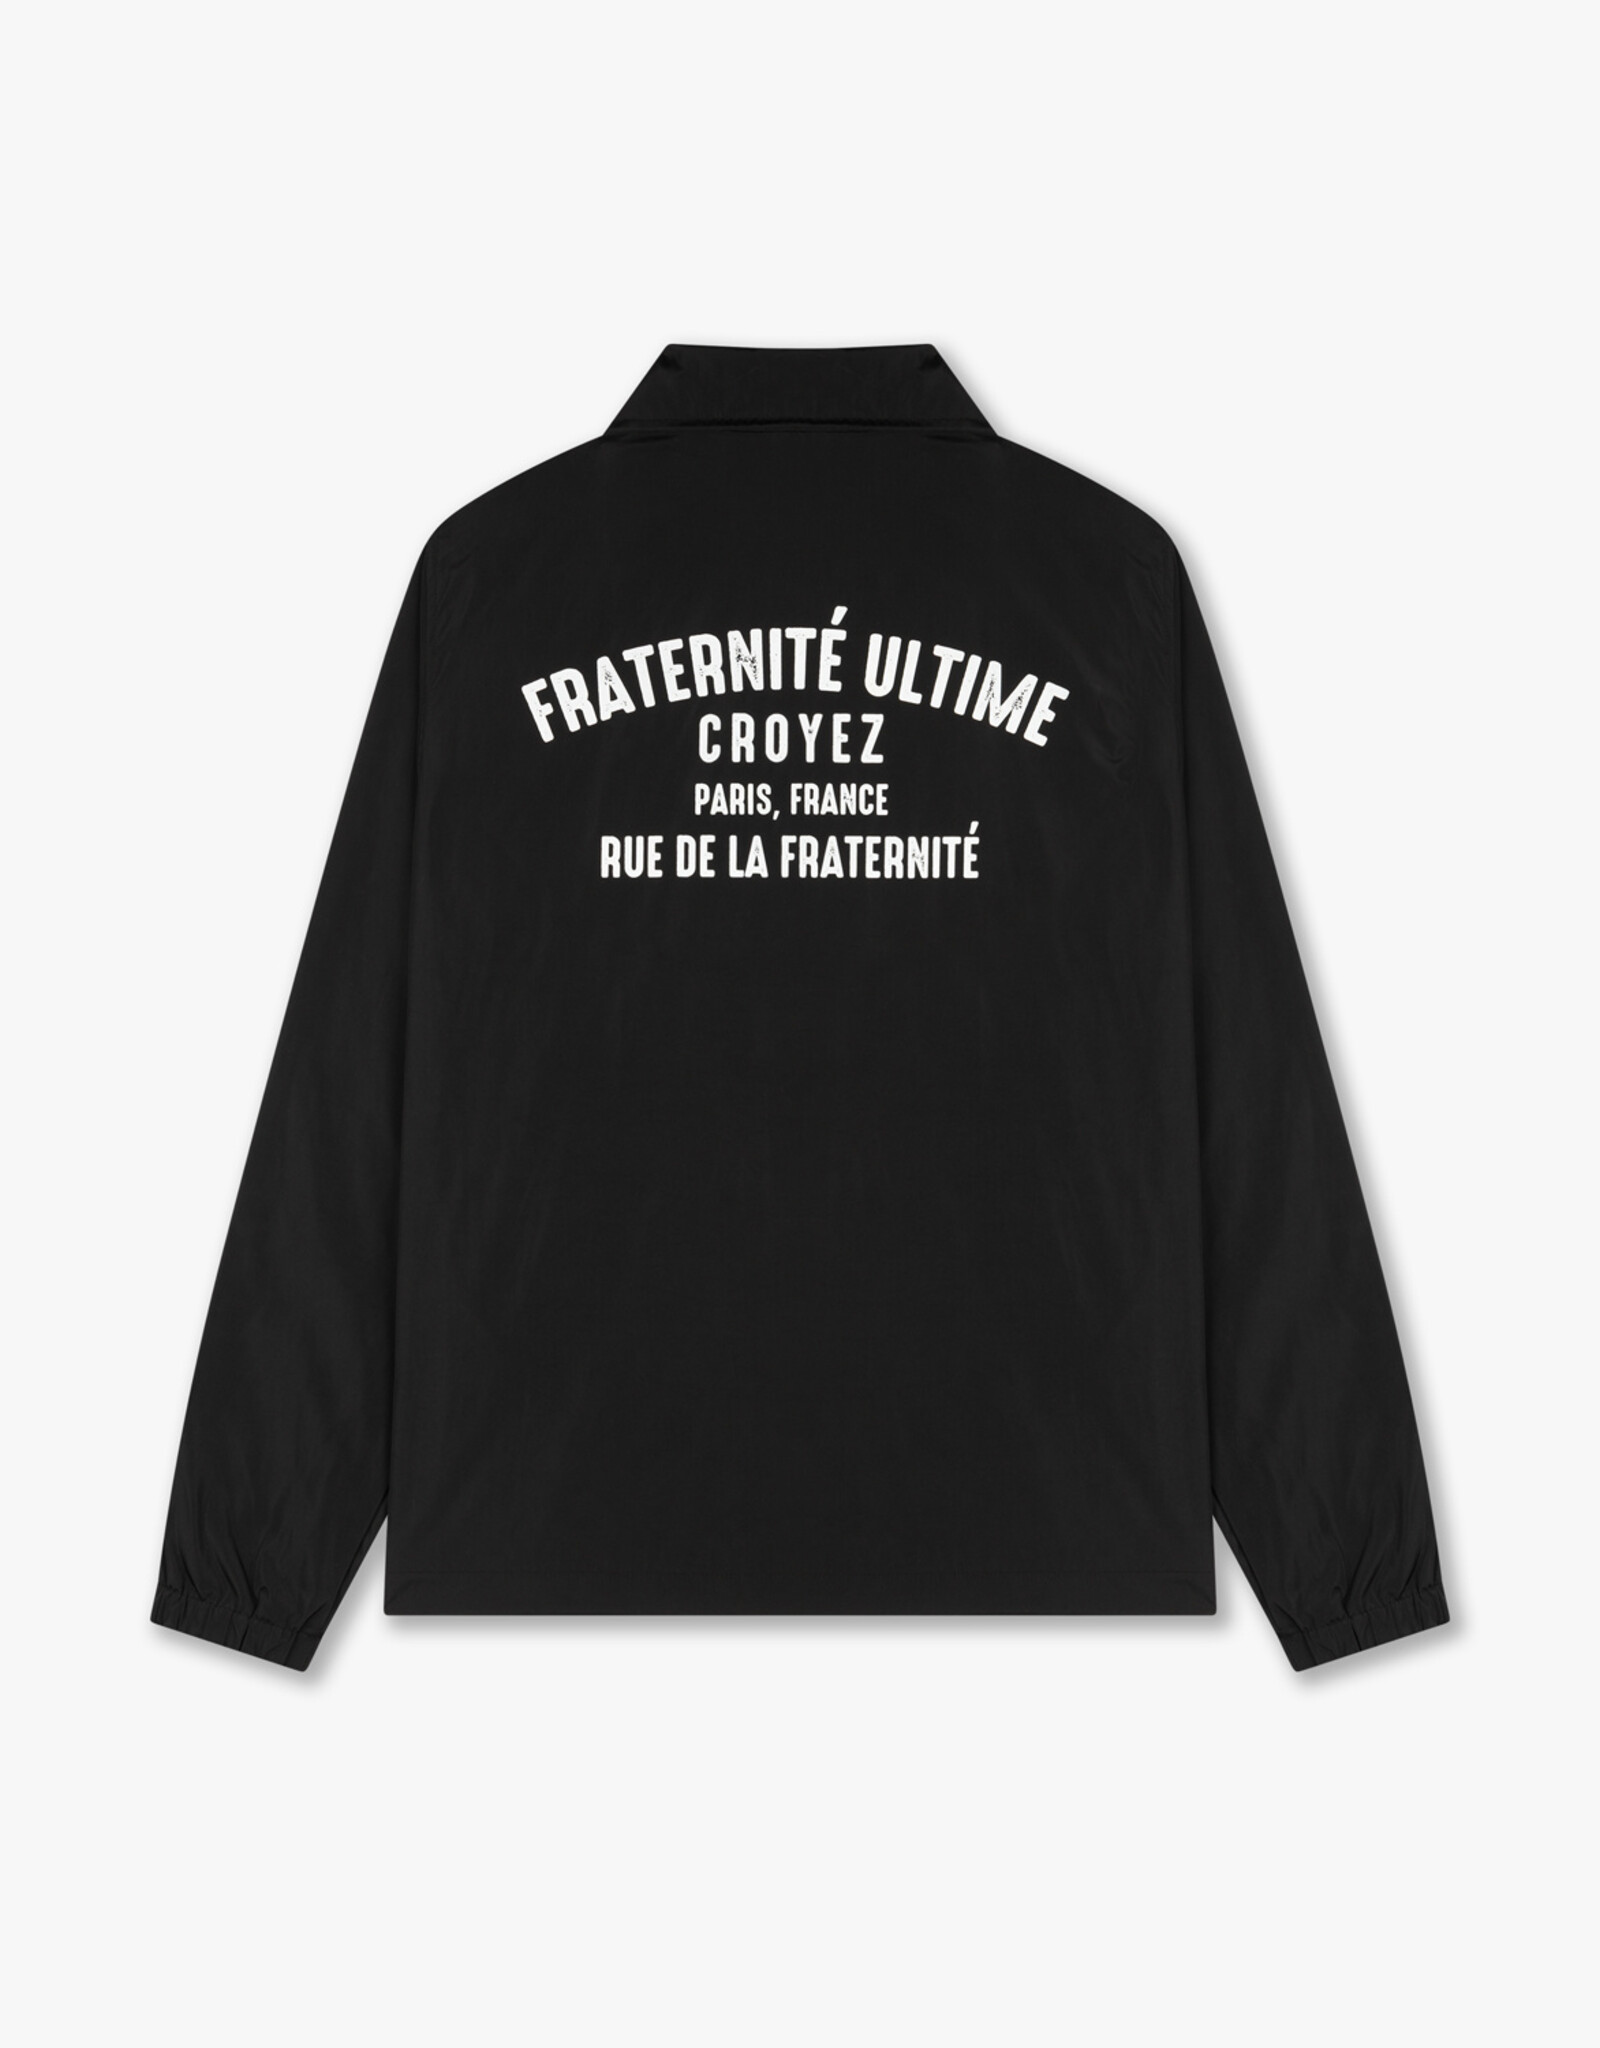 Croyez Fraternité  Coach Jacket